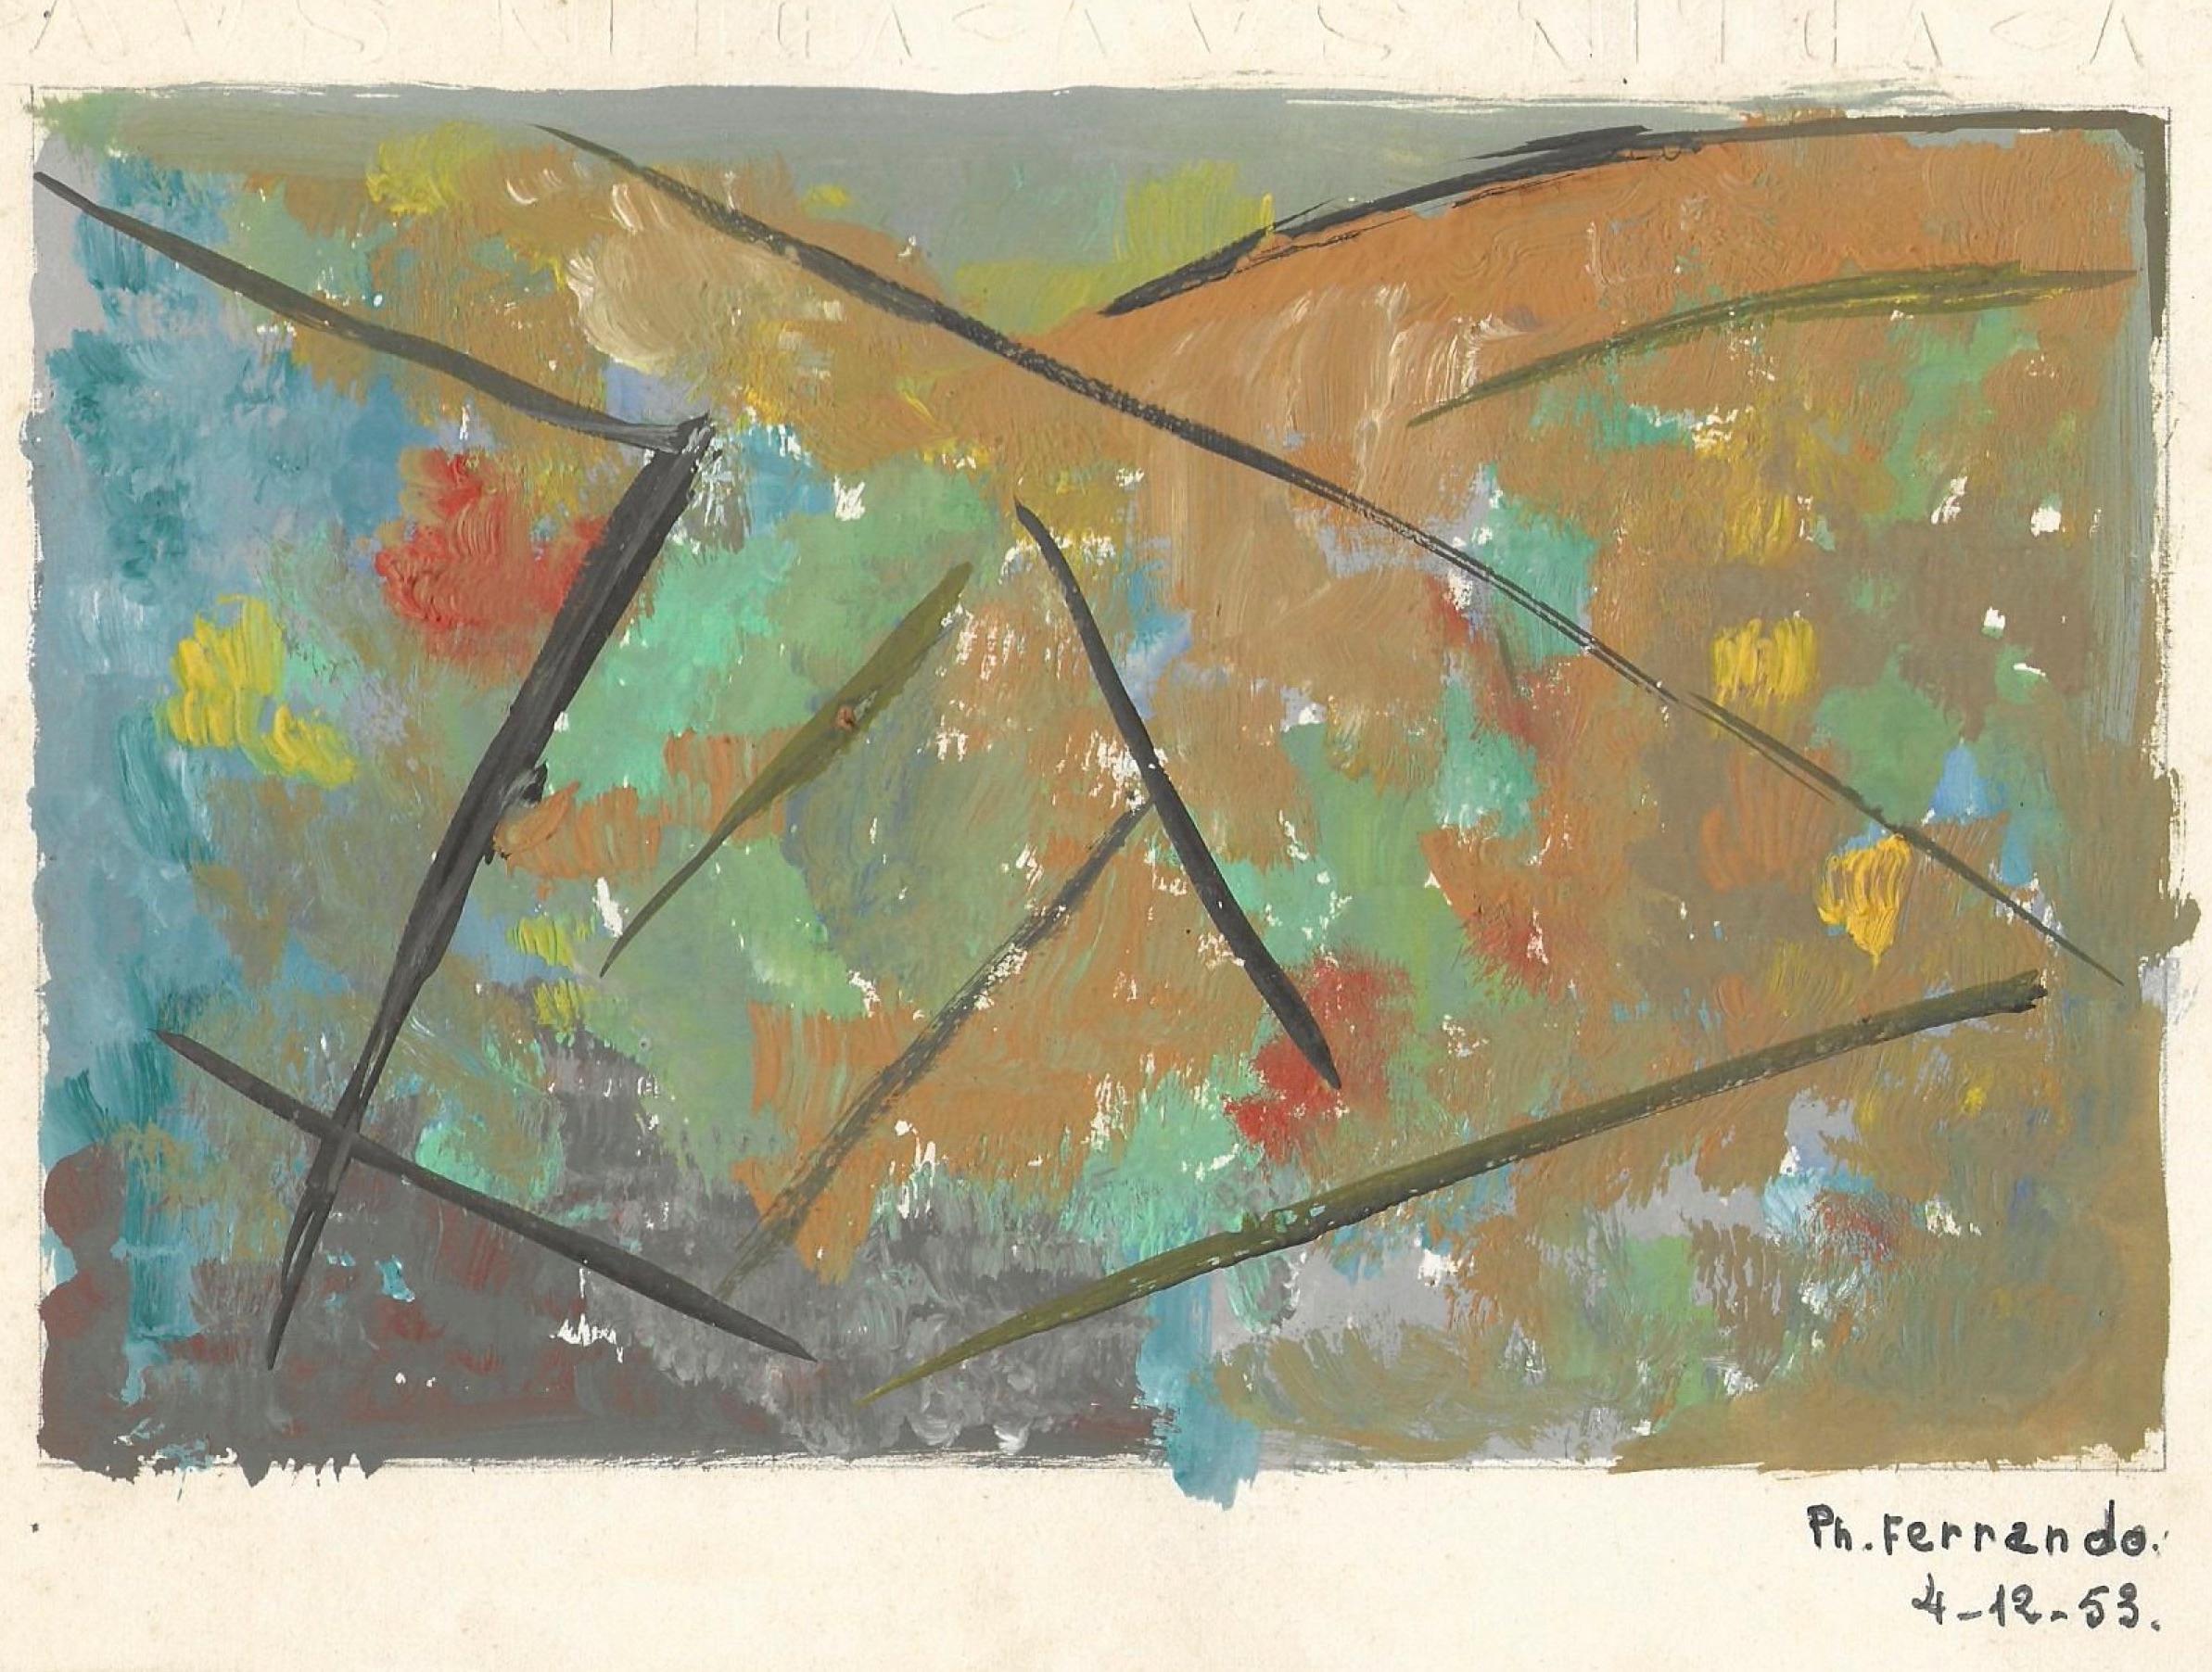 Philippe Ferrando Abstract Painting - Géométries - Tempera on Paper by Ph. Ferrando - 1953